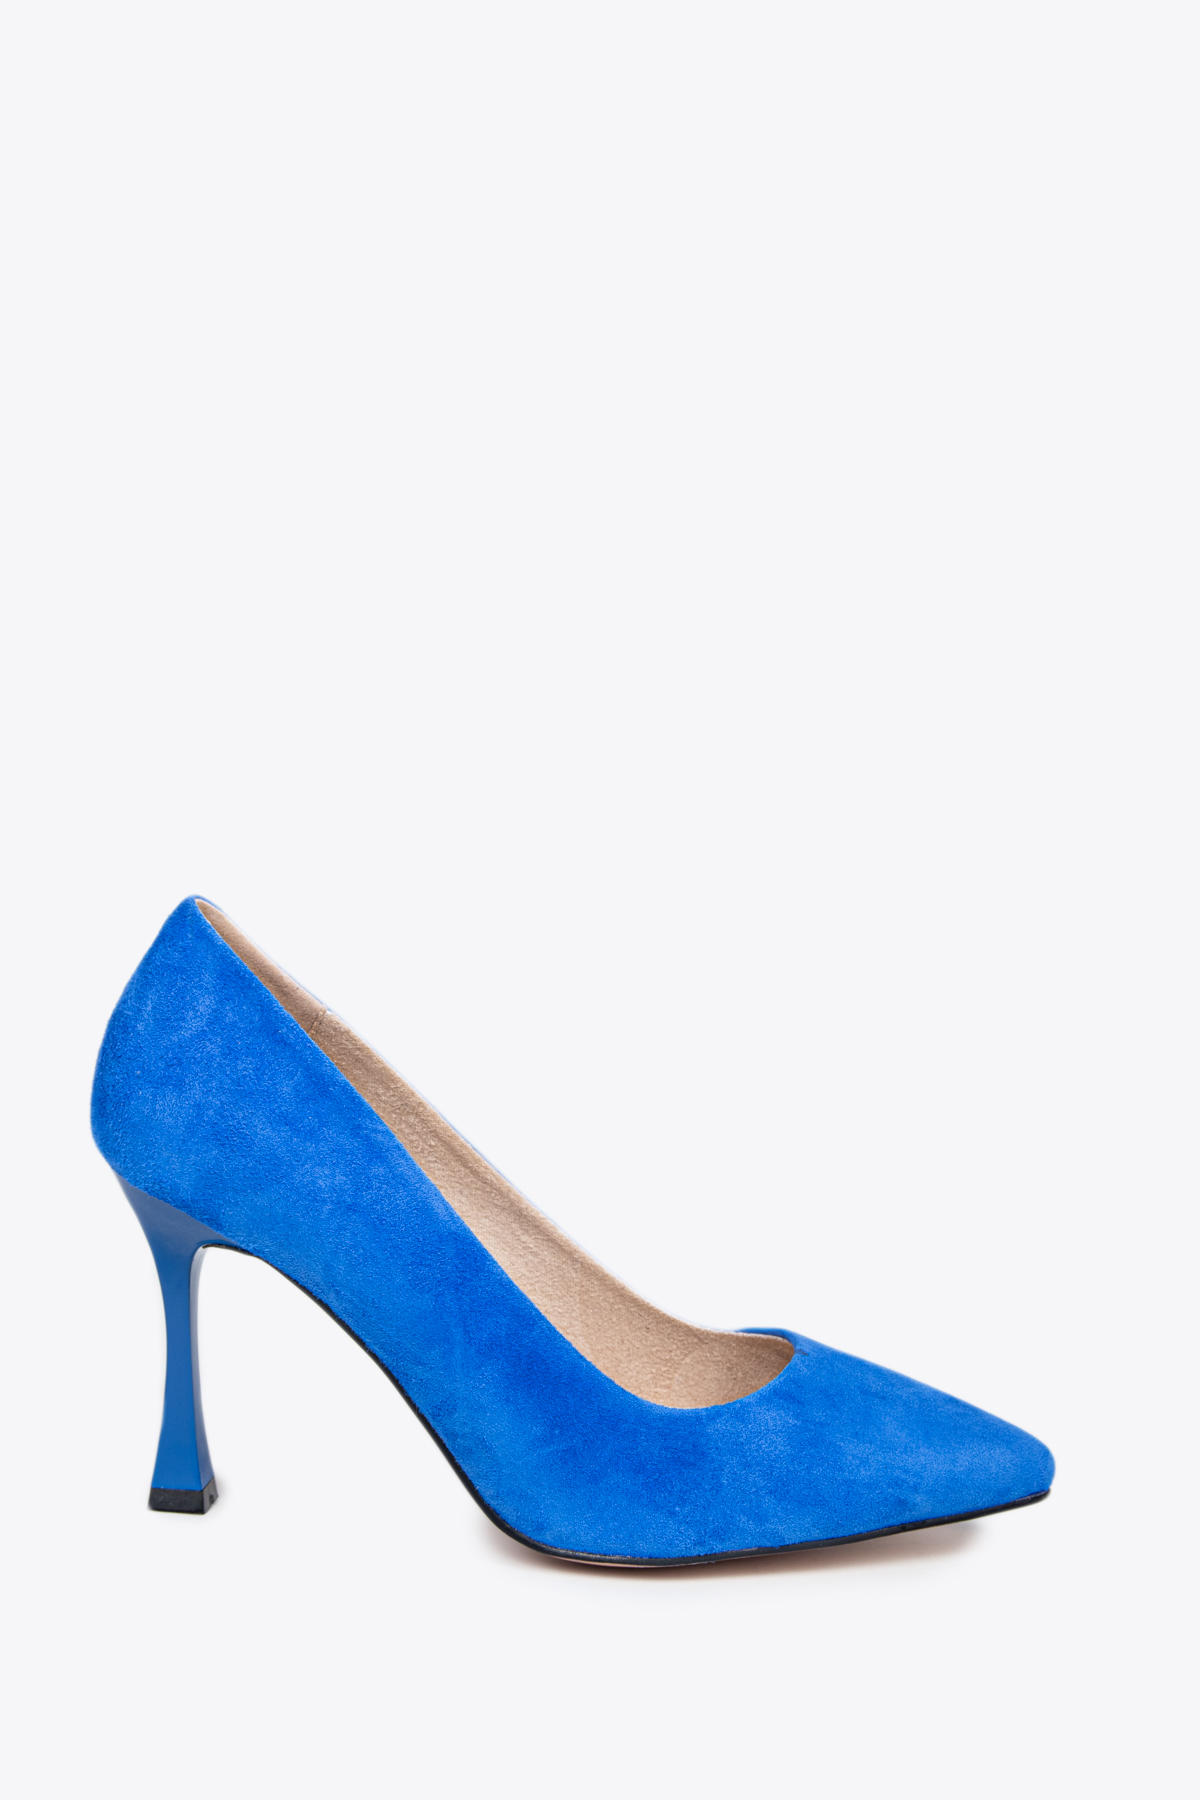 Туфли женские Tofa 603334-5 синие 36 RU